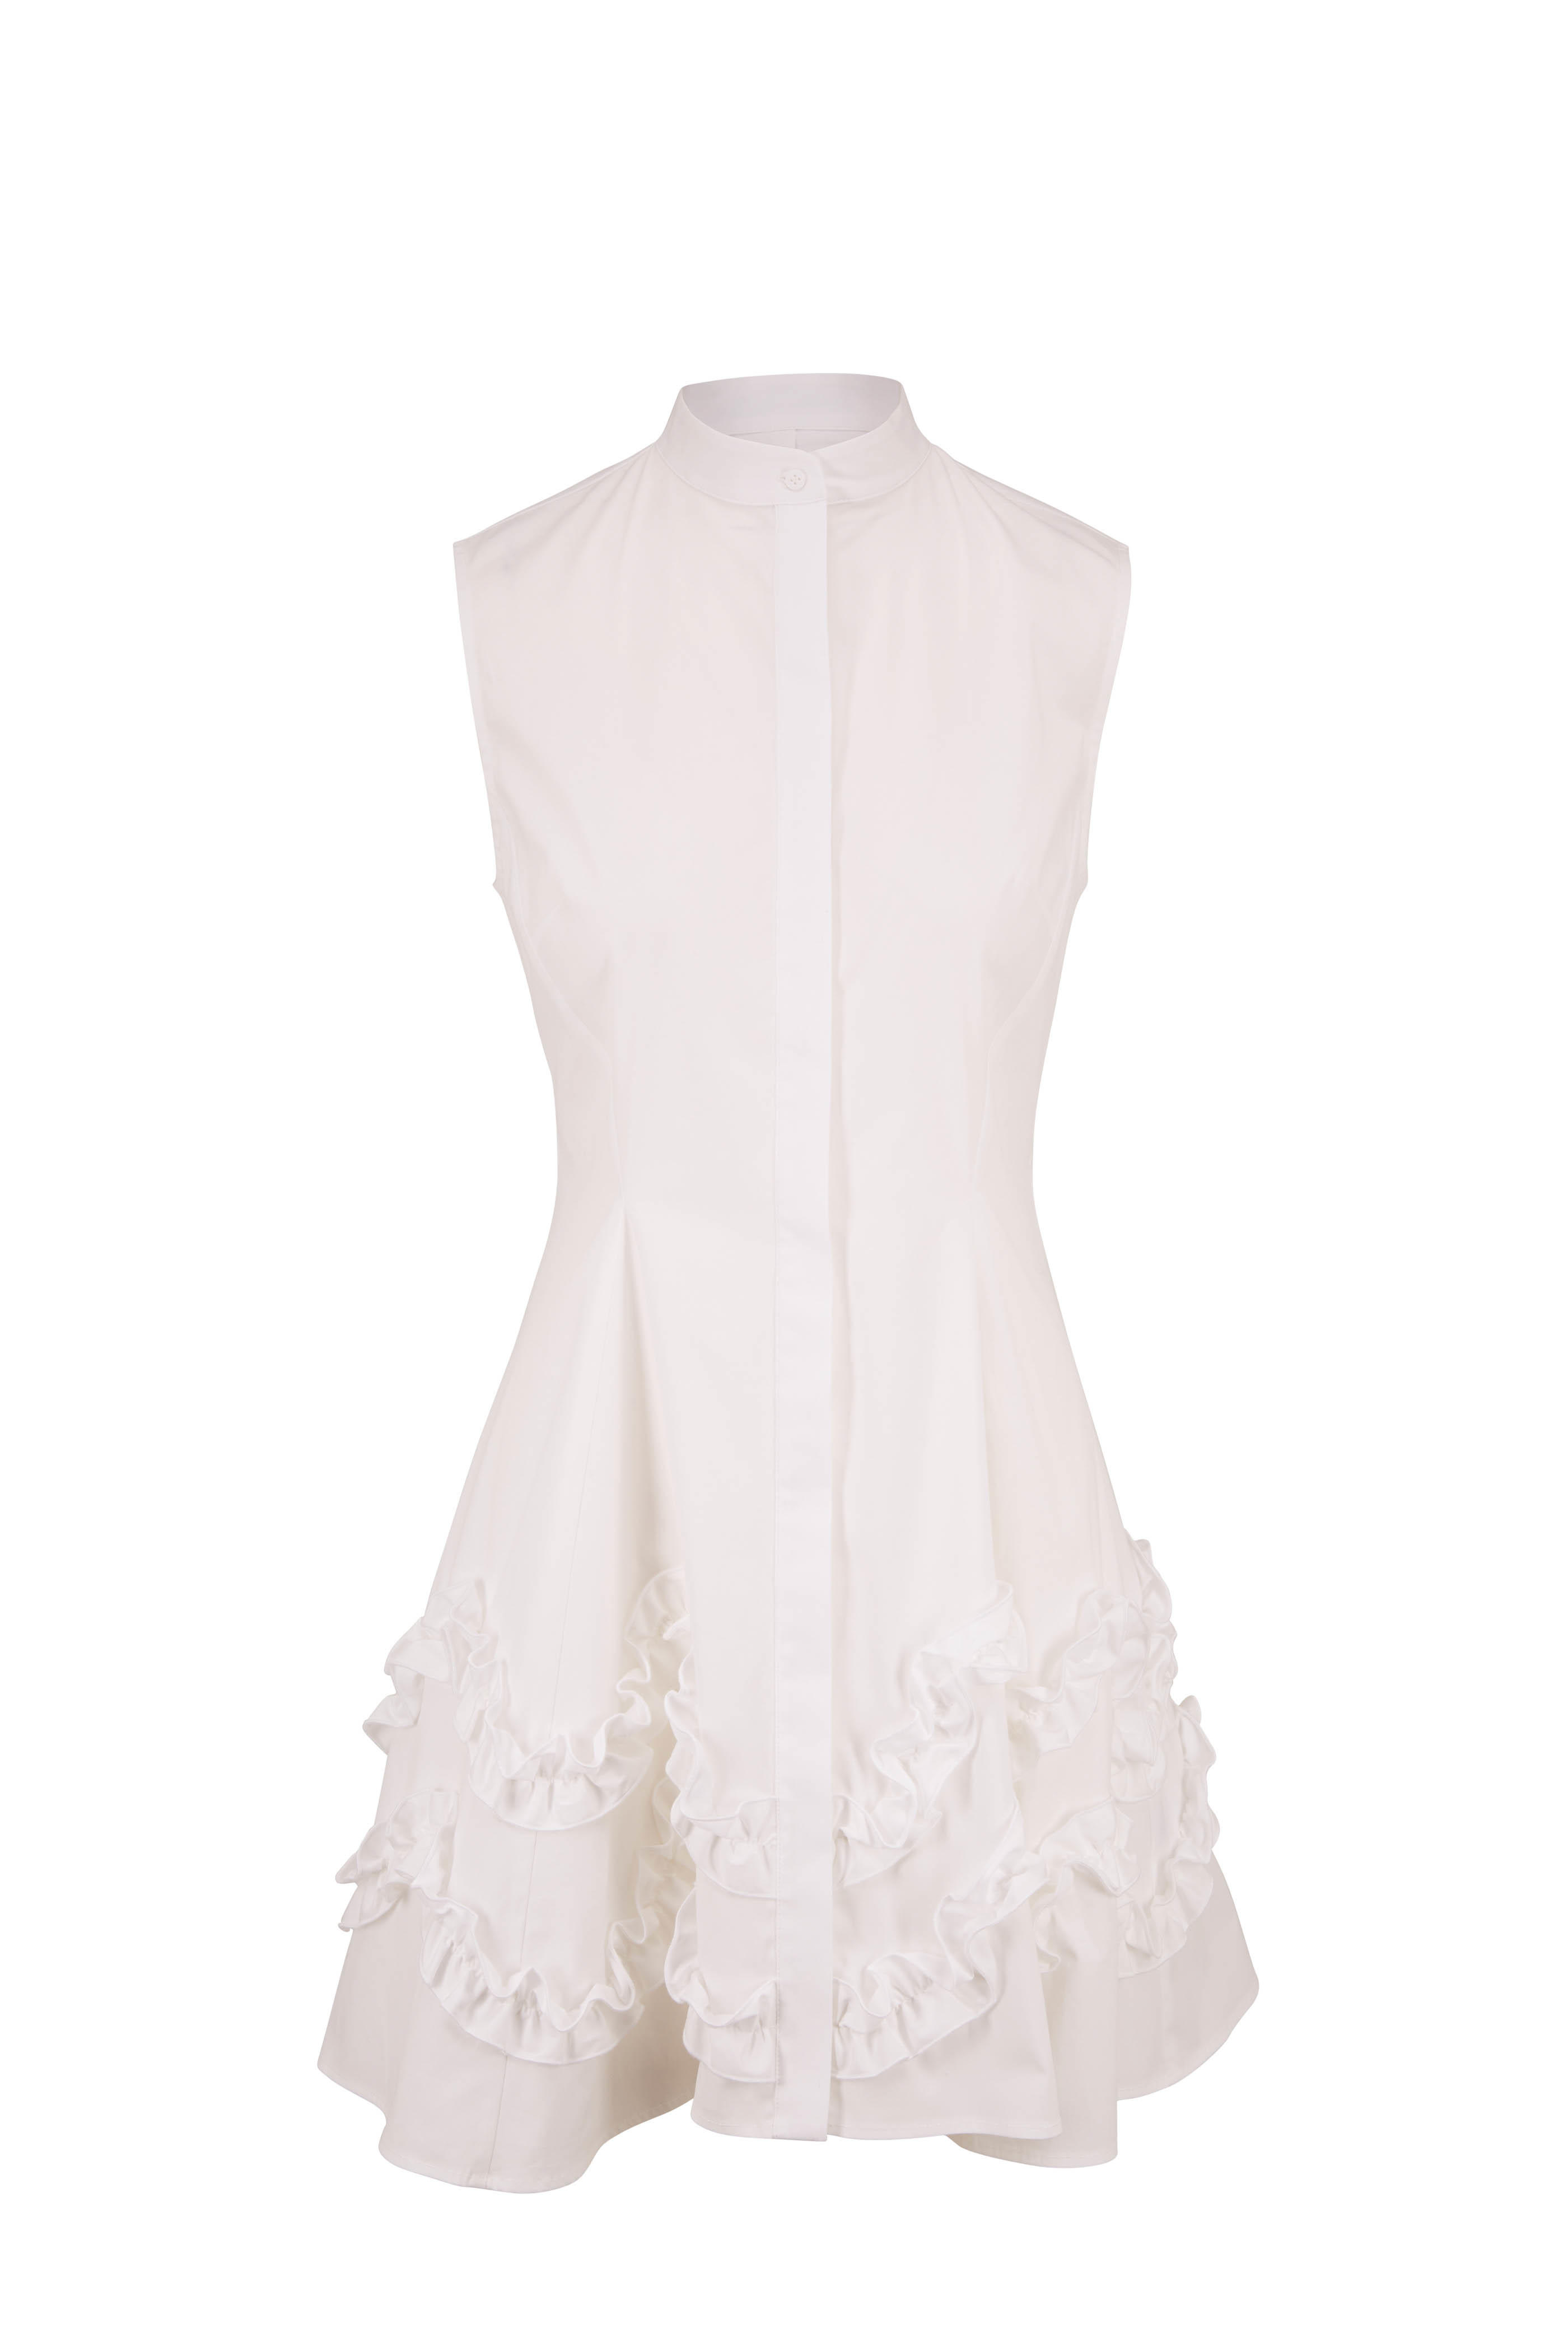 lela rose white dress